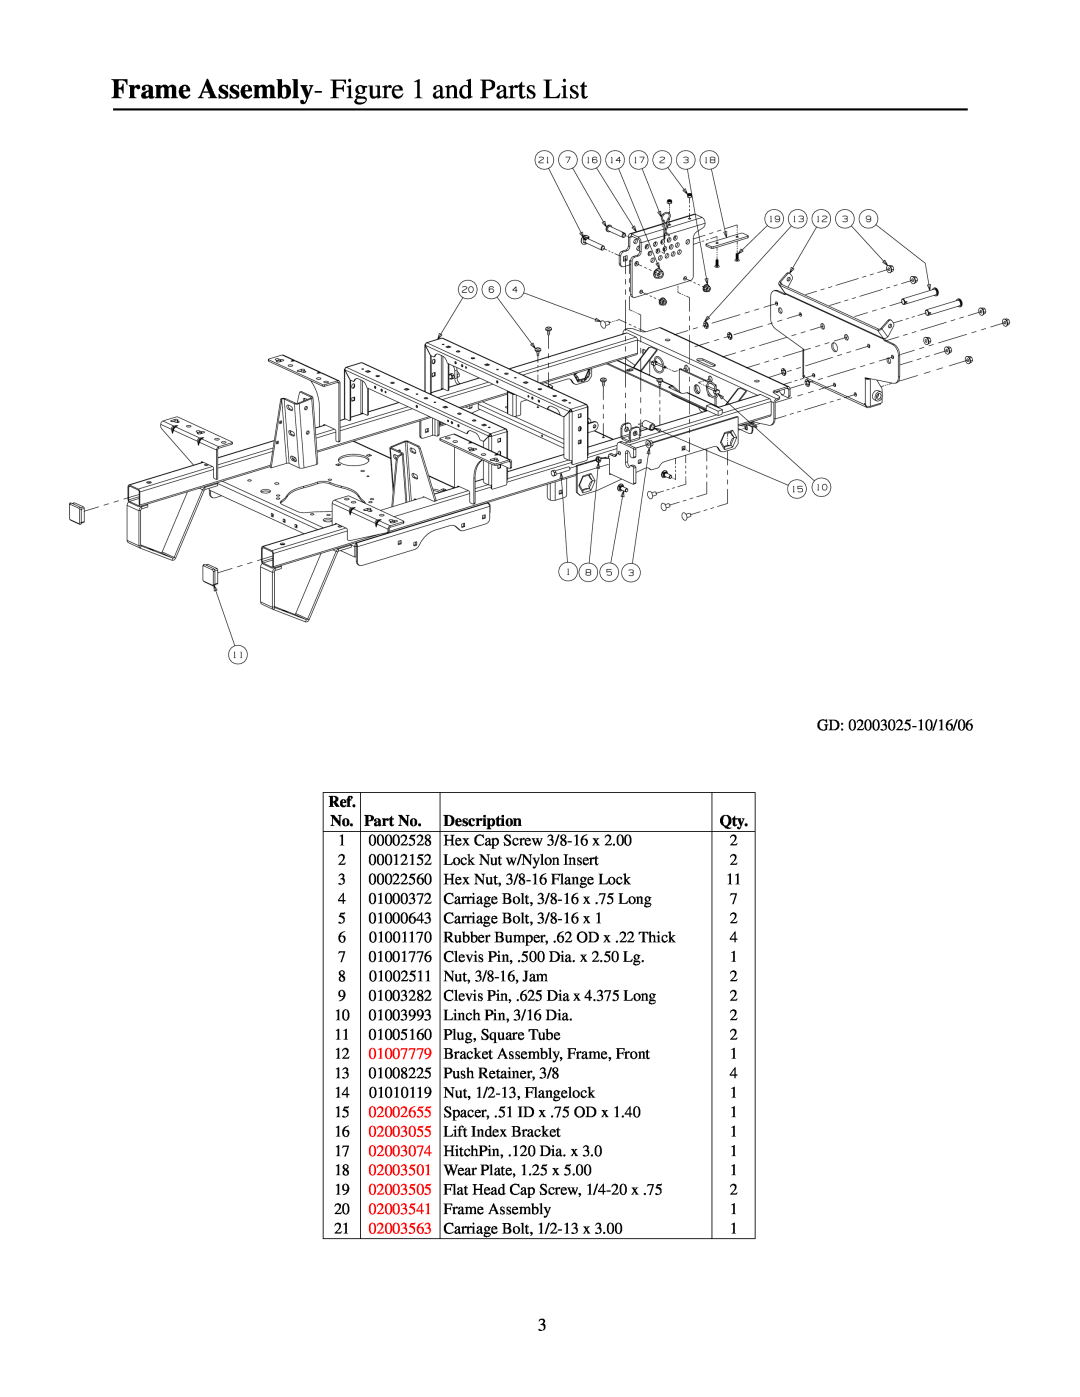 Cub Cadet 53AI8CTZ750 manual Frame Assembly- and Parts List, Description, 01007779, 02002655, 02003055, 02003074, 02003501 